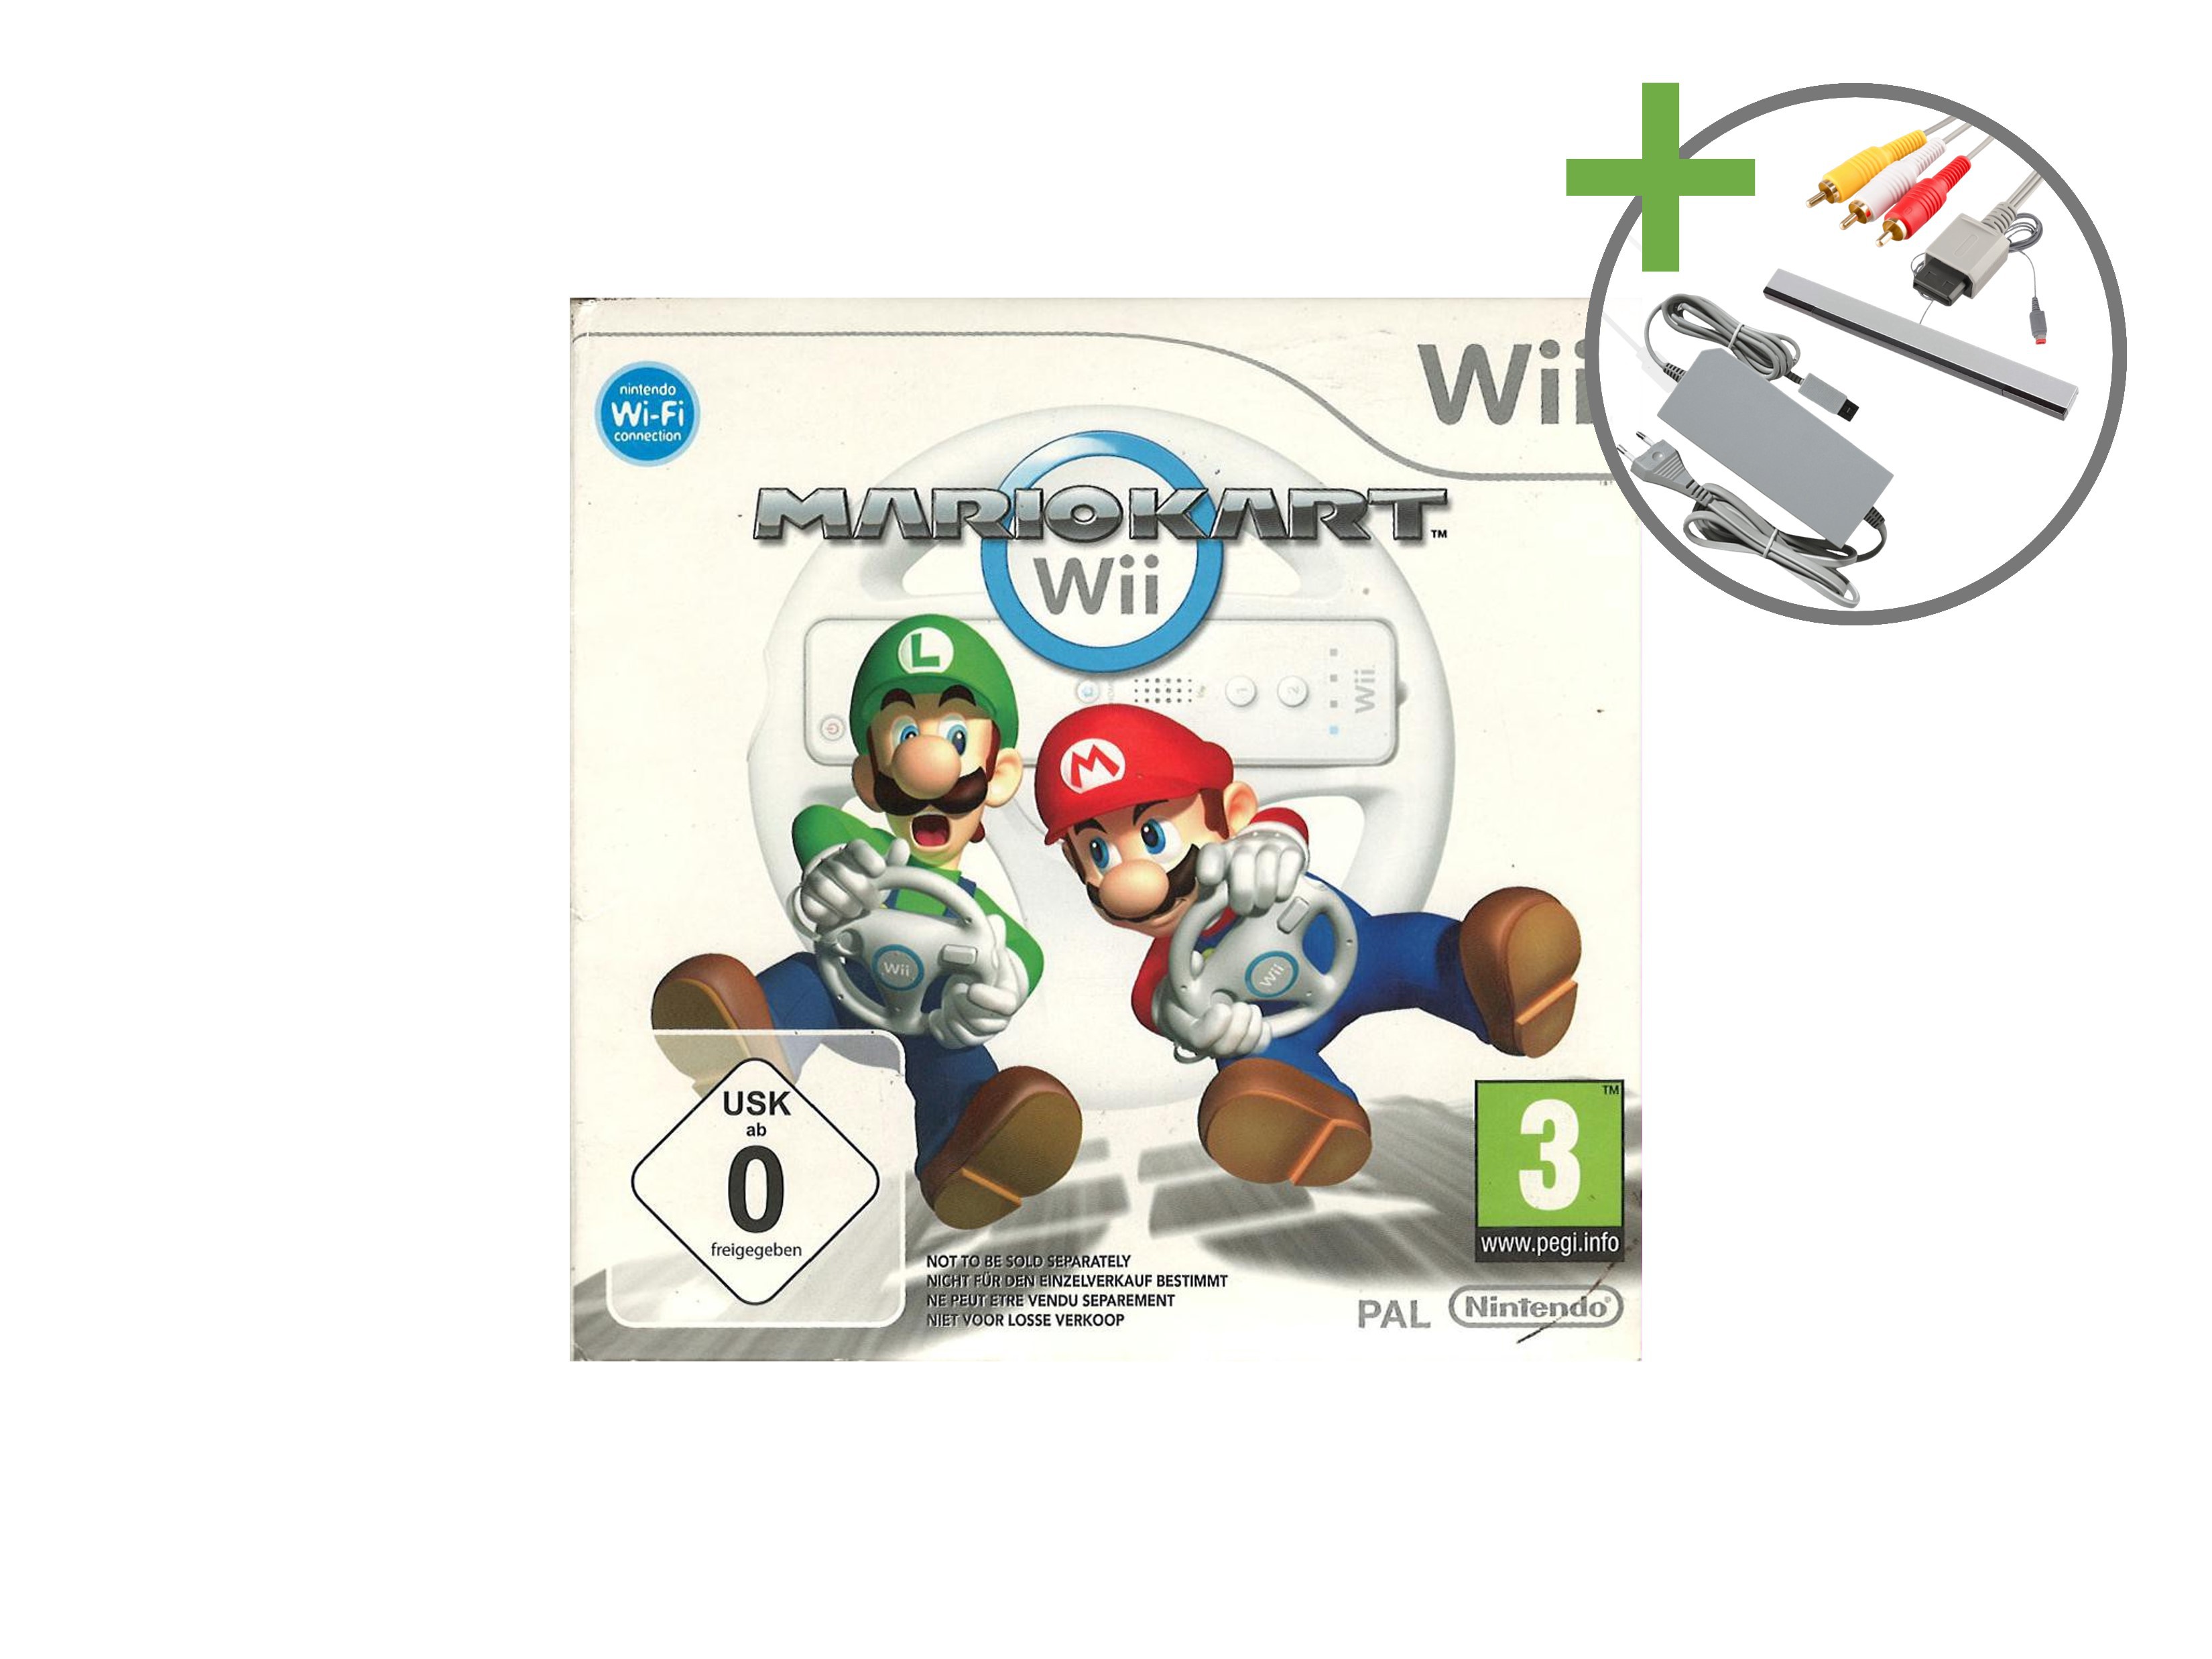 Nintendo Wii Starter Pack - Mario Kart Motion Plus White Edition [Complete] - Wii Hardware - 6